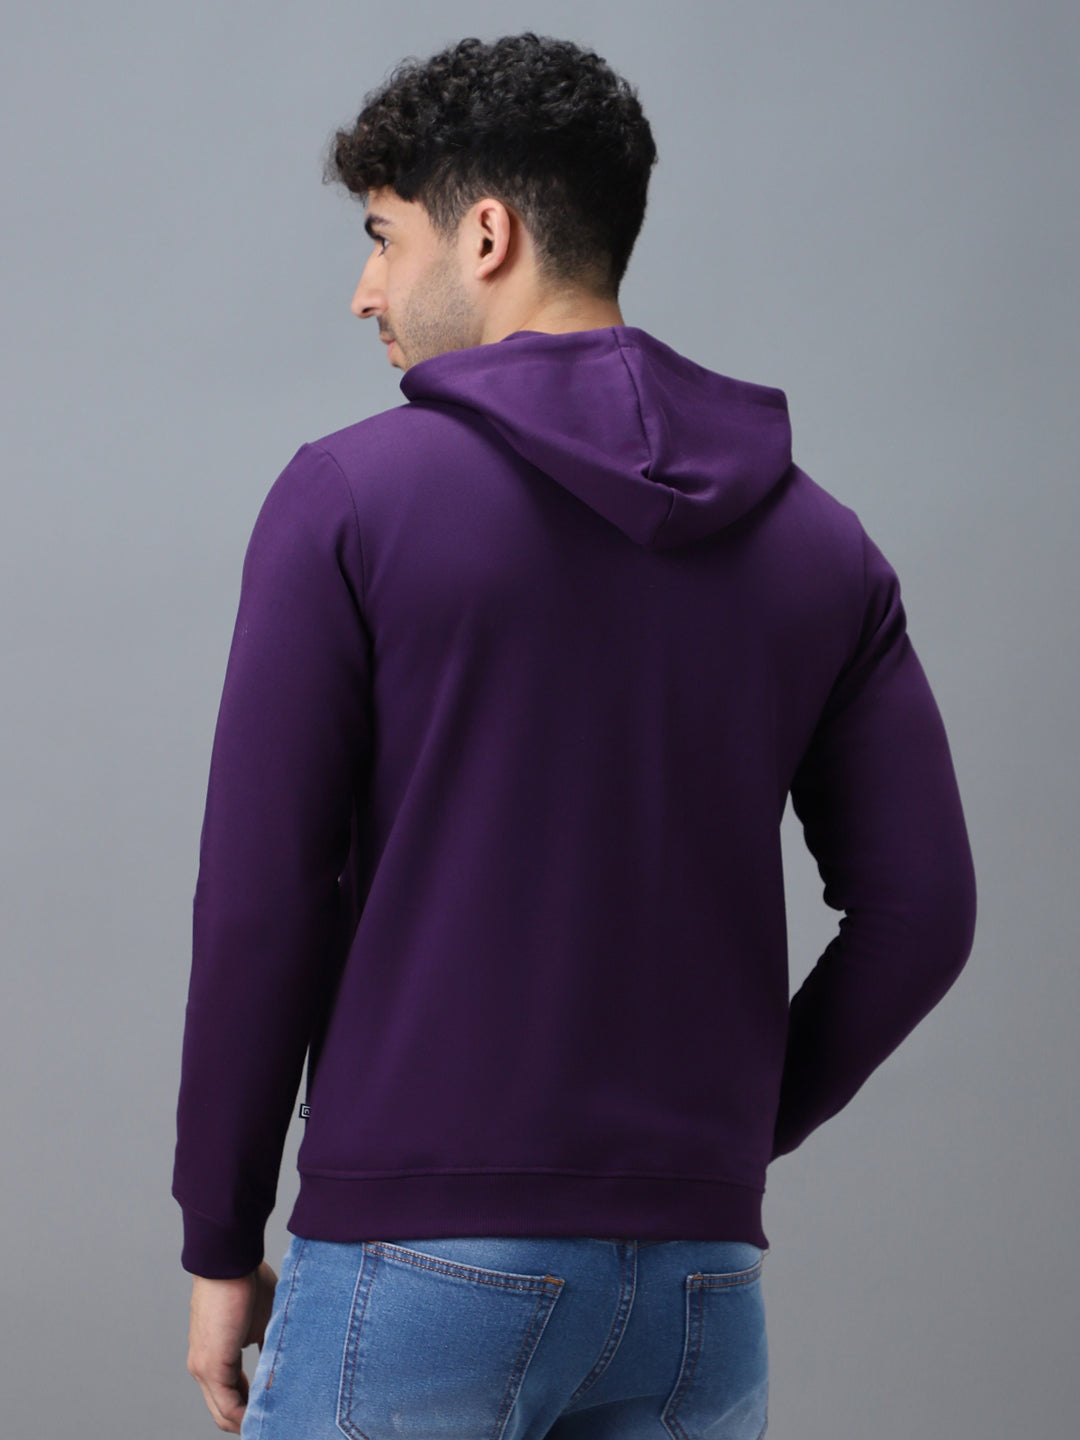 Urbano Fashion Men's Purple Cotton Solid Zippered Hooded Neck Sweatshirt